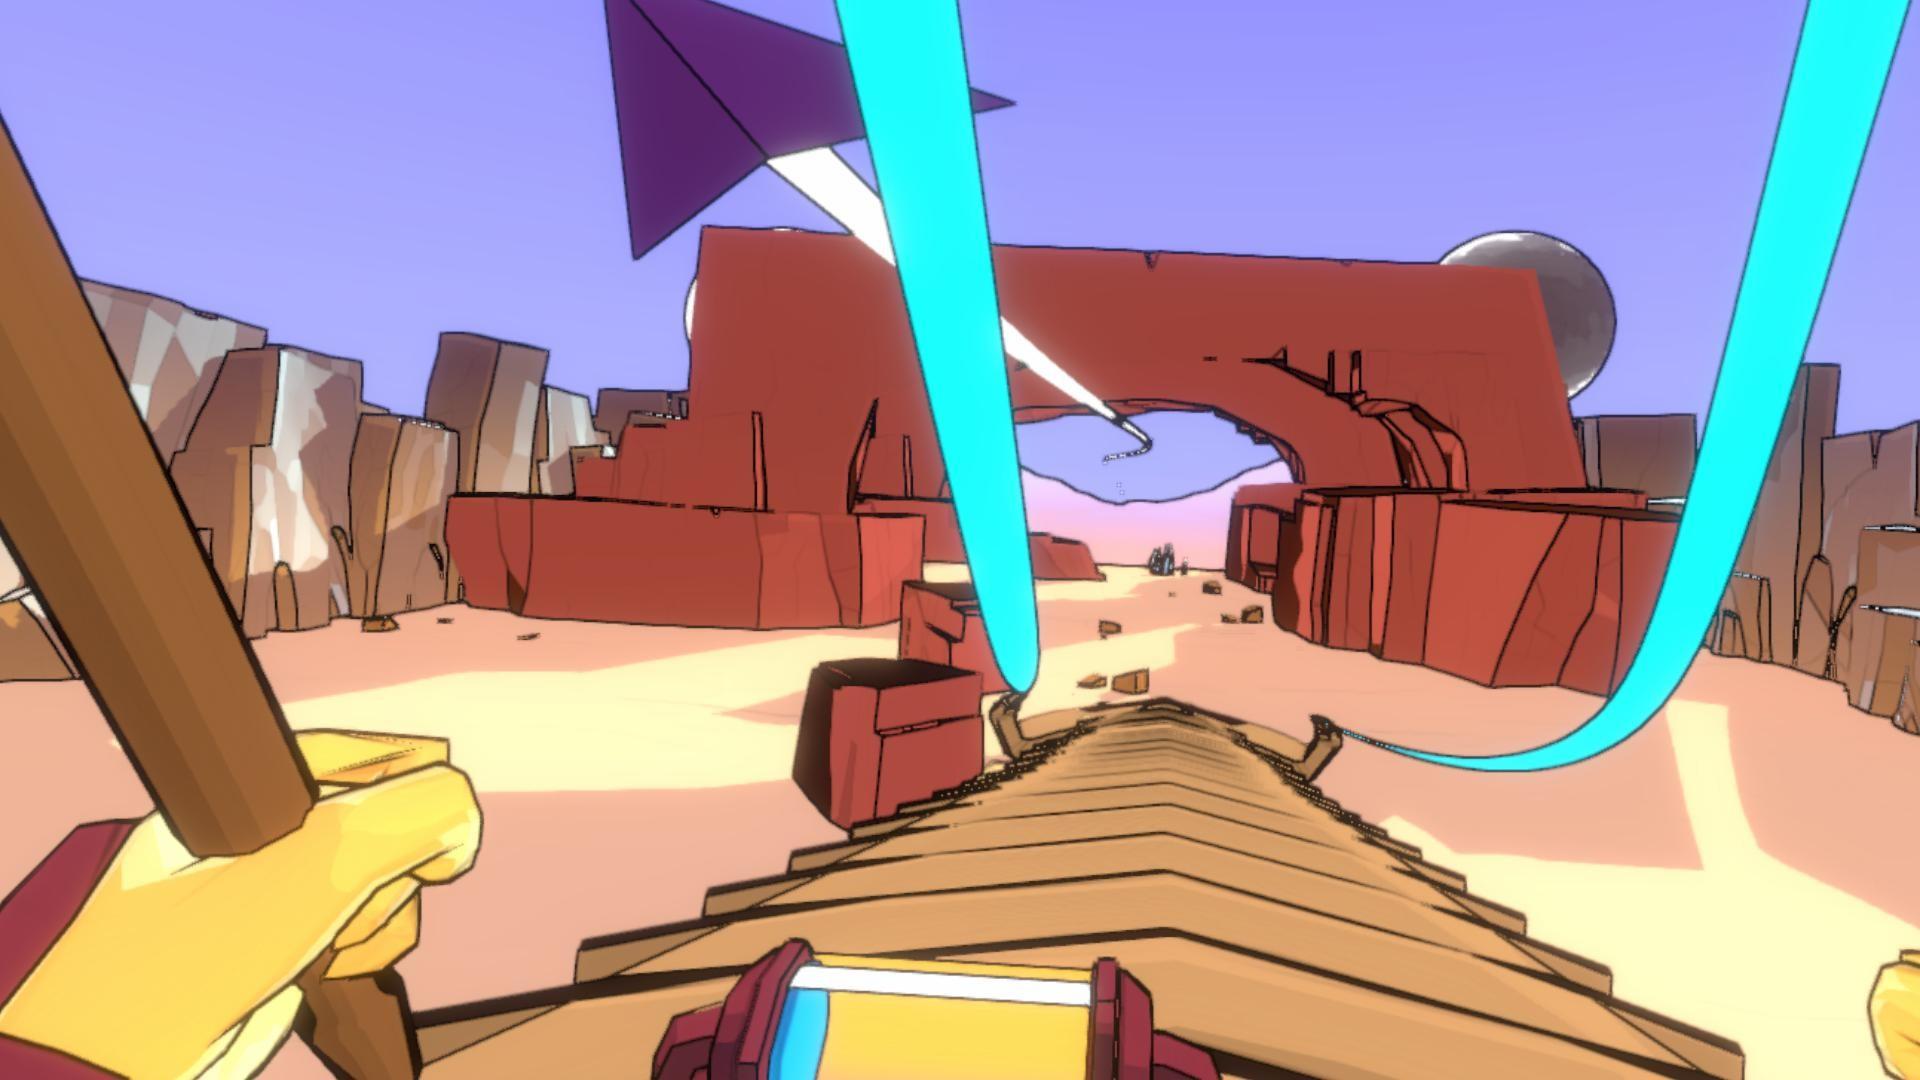 Screenshot of Giant Worm Rider